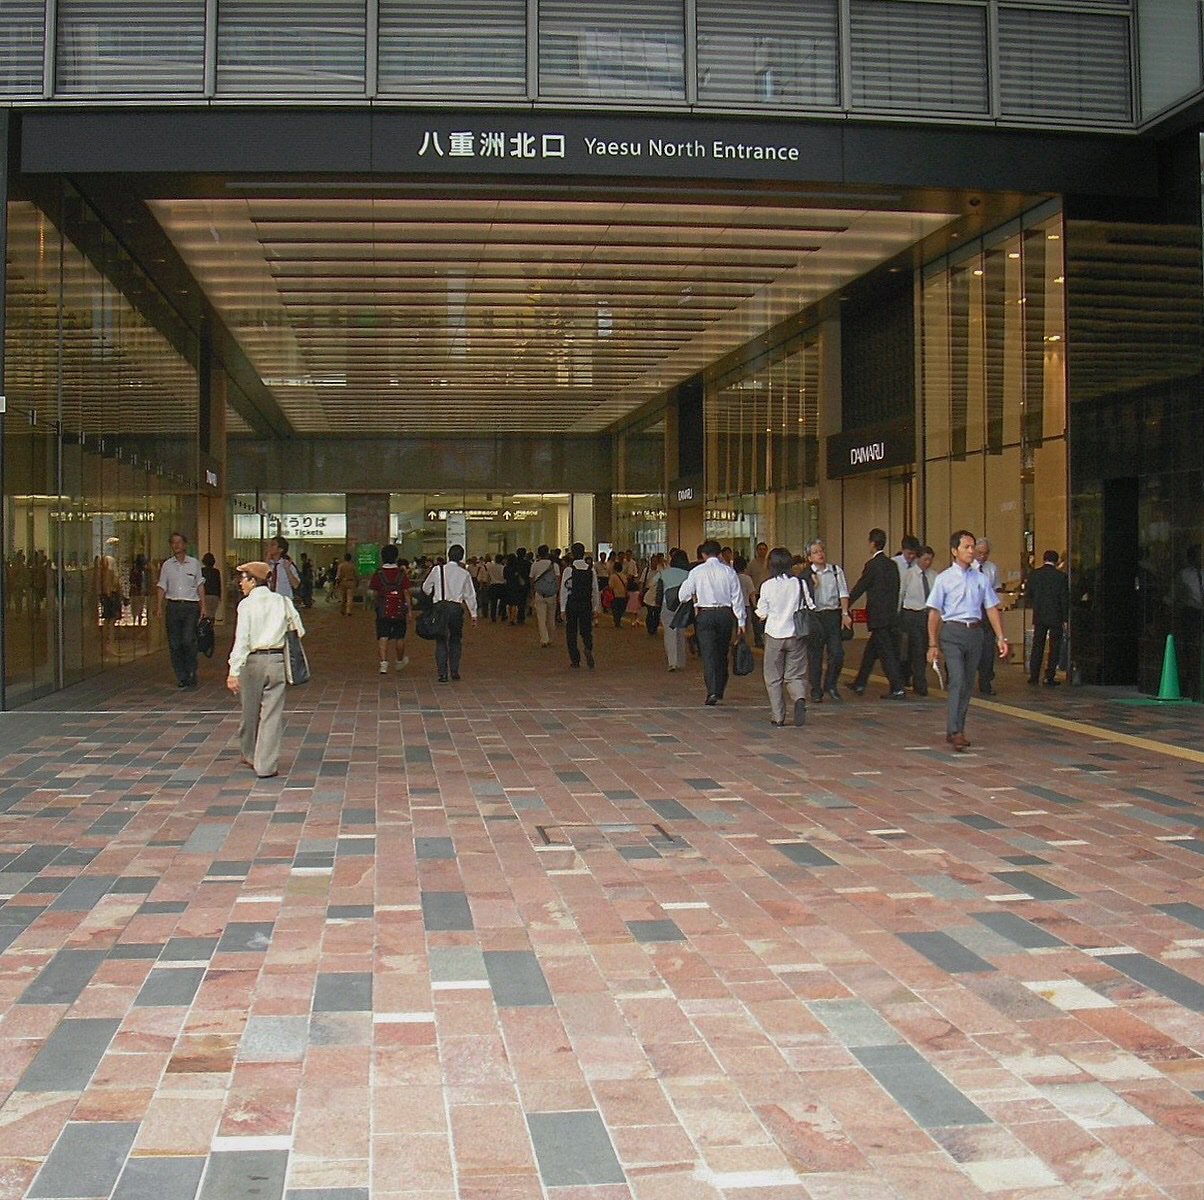 Palladium Plus ARG B Tokyo Railway Station North Entrance